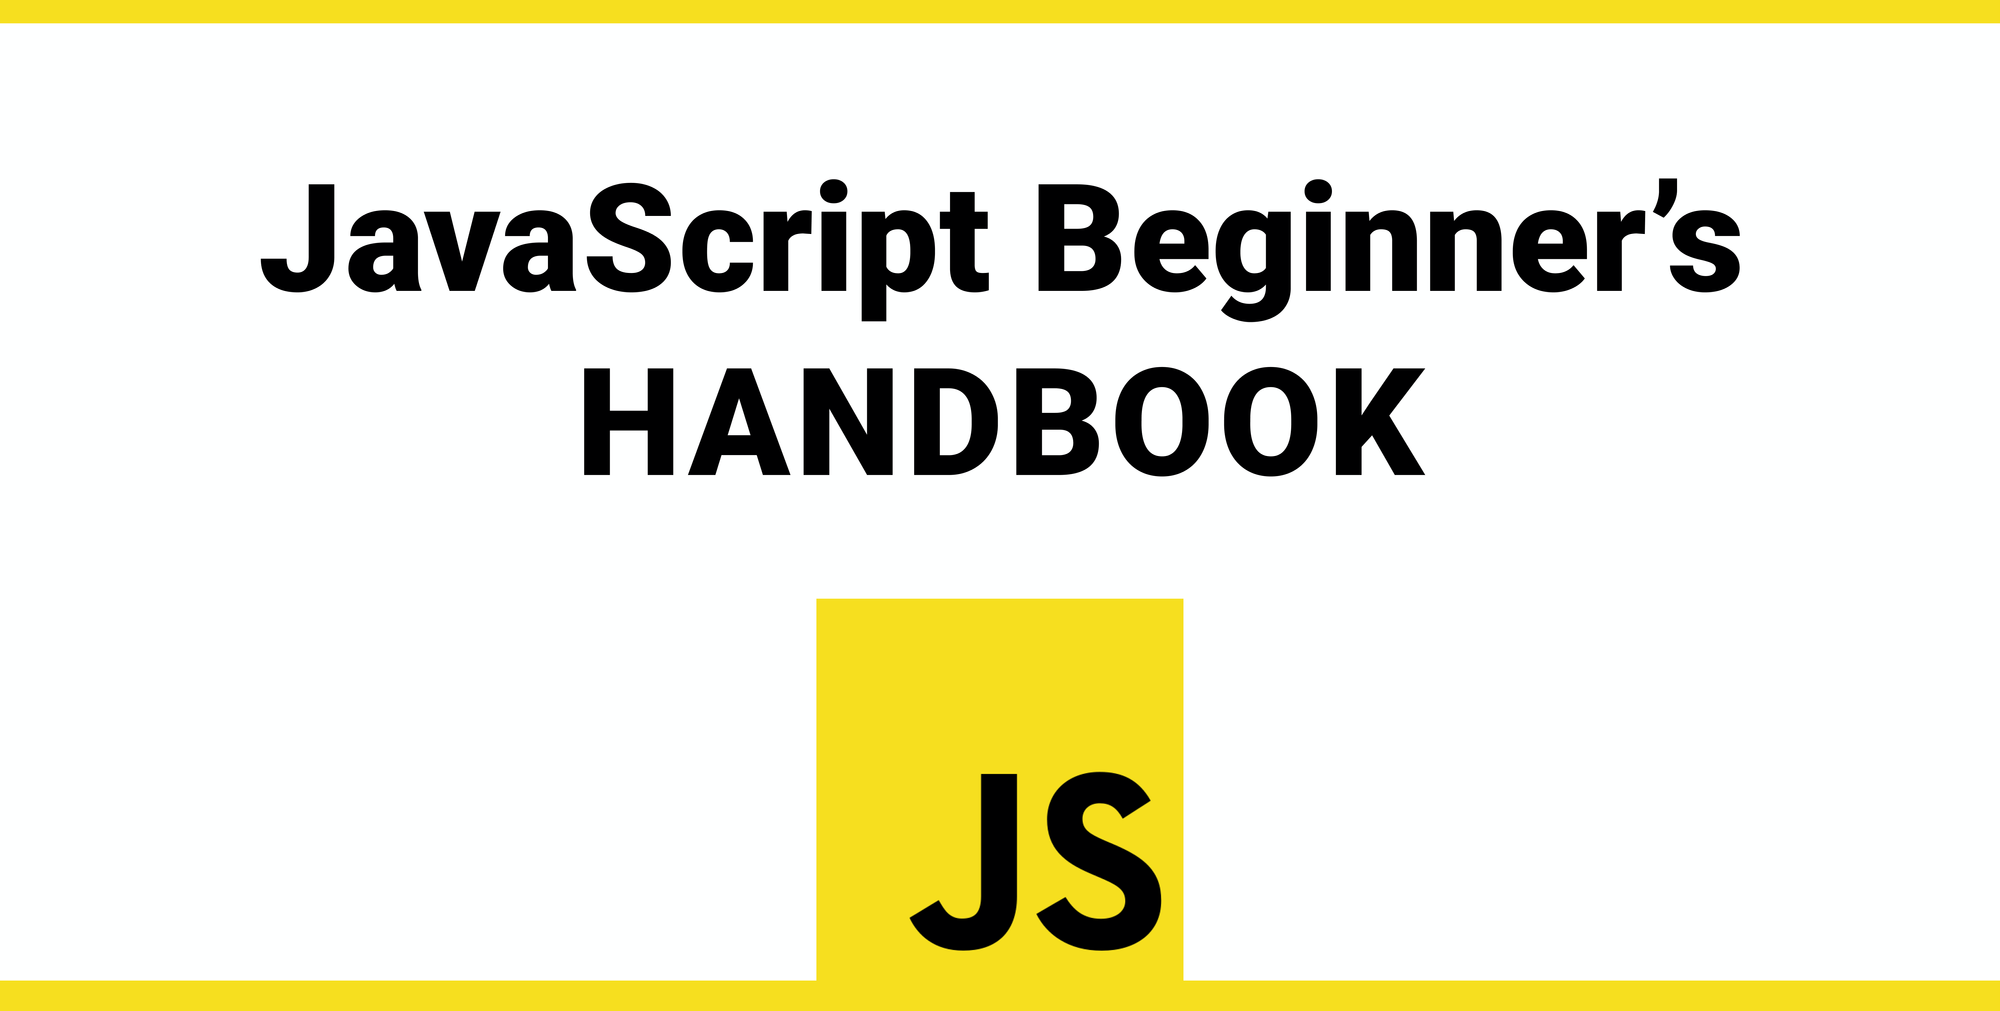 The JavaScript Beginner's Handbook 20 Edition